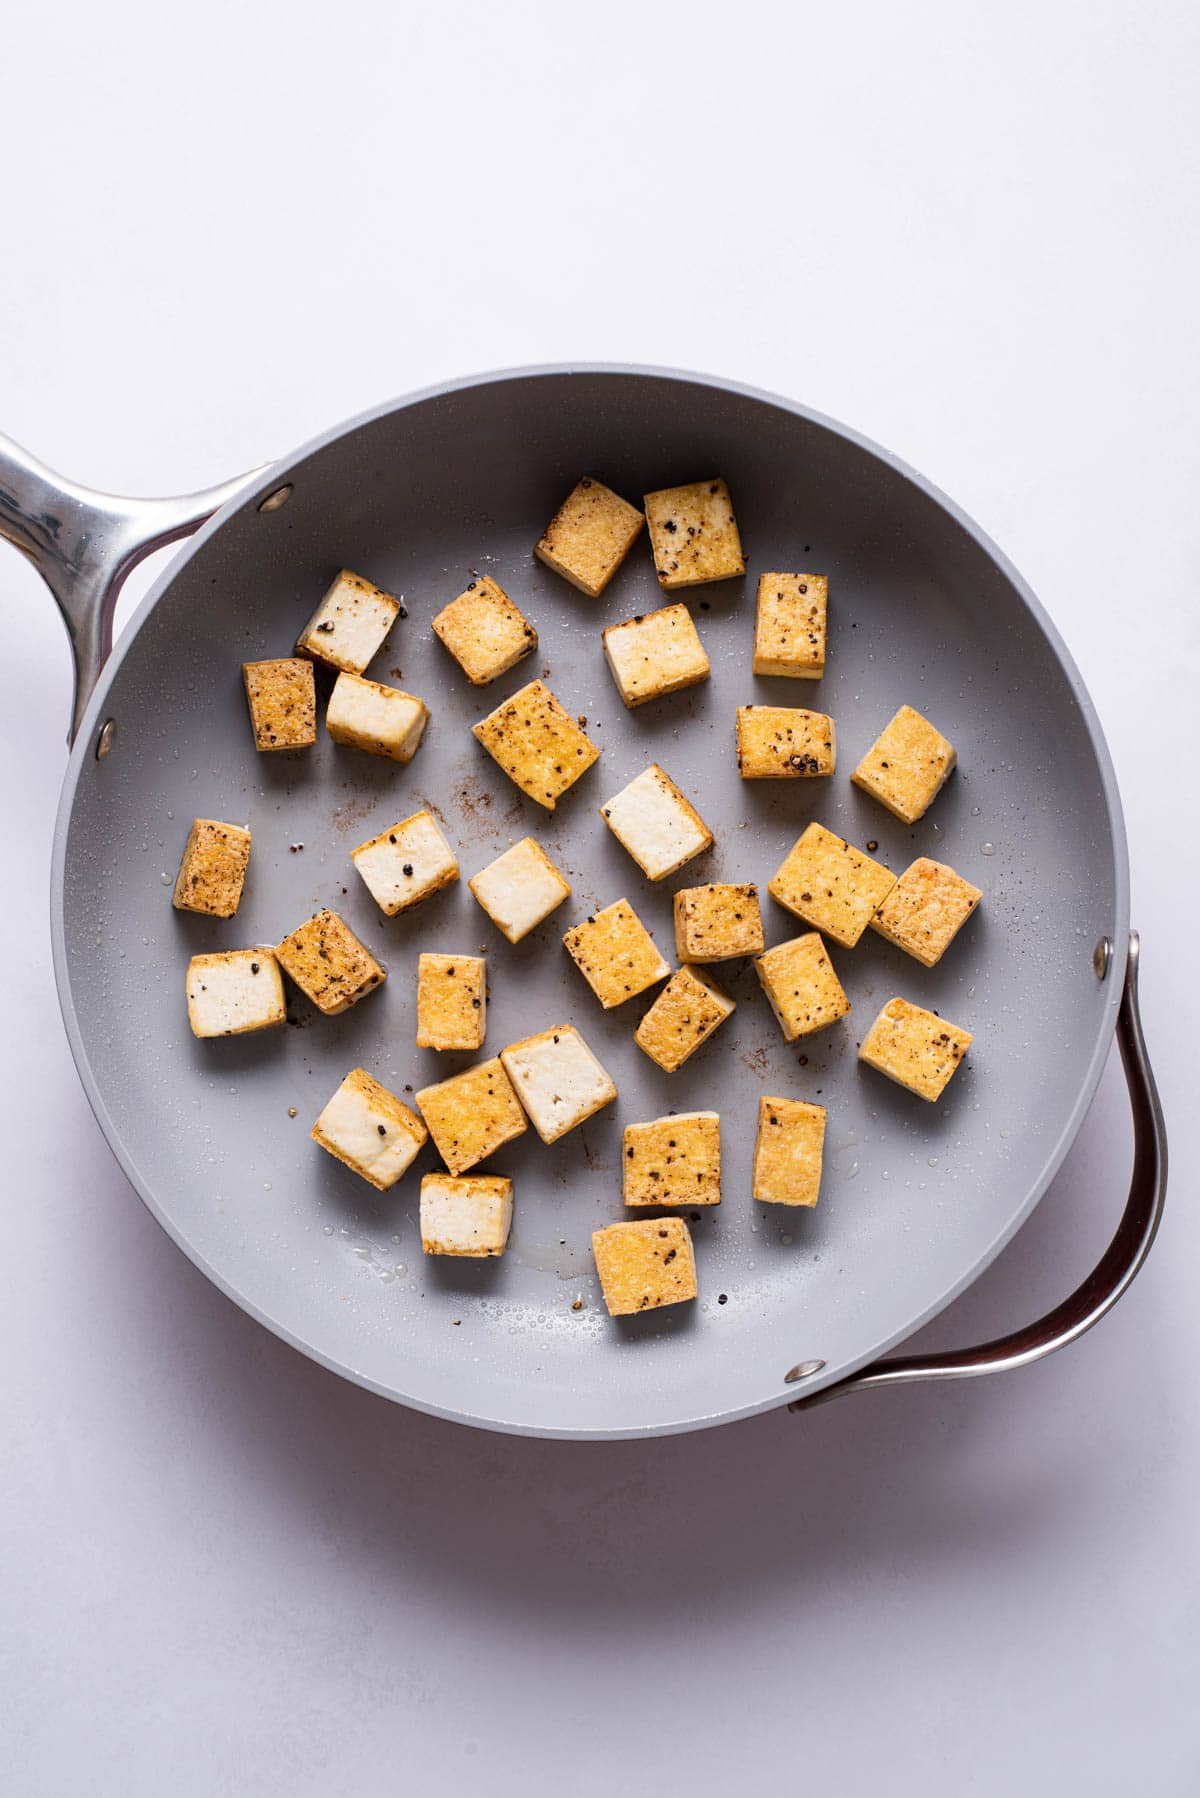 Crispy tofu cubes in a skillet.